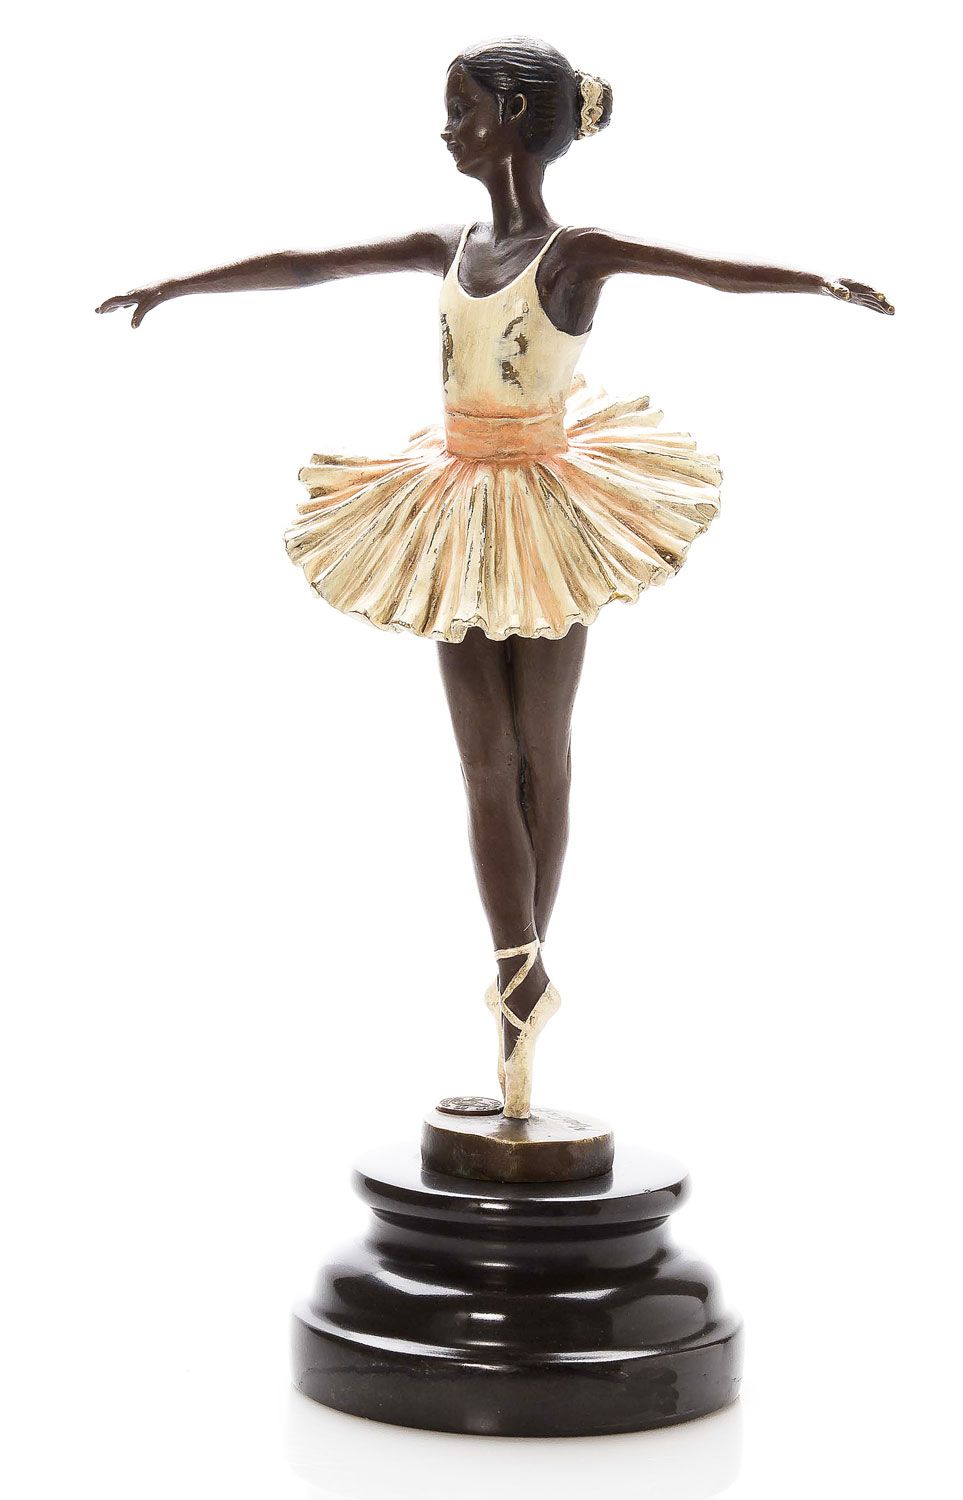 Bronze sculpture dancer ballerina ballet figure antique stil 30cm | eBay